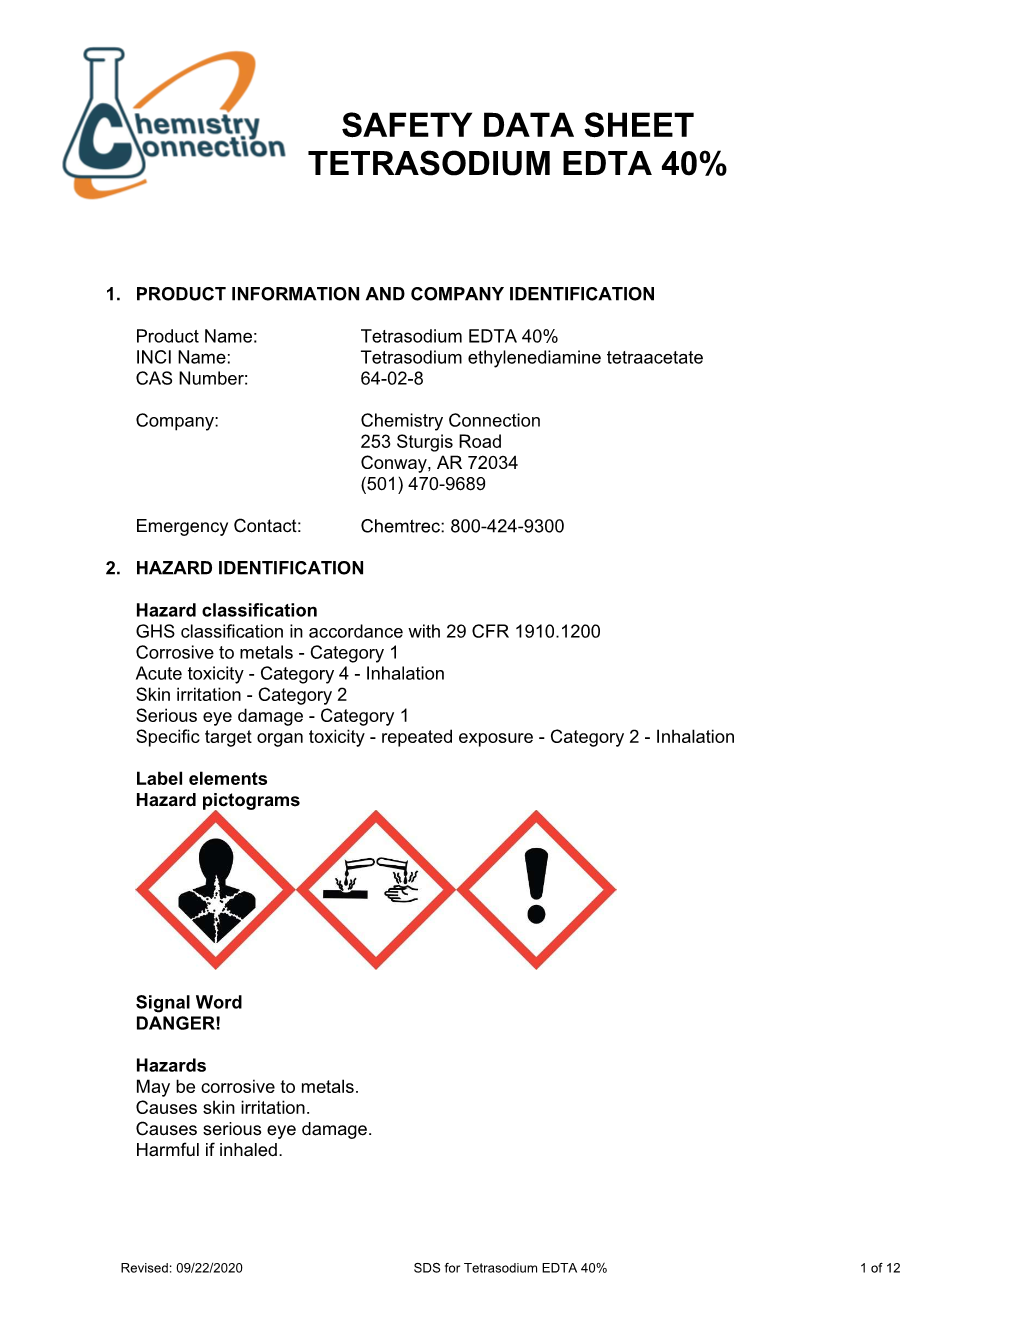 Safety Data Sheet Tetrasodium Edta 40%